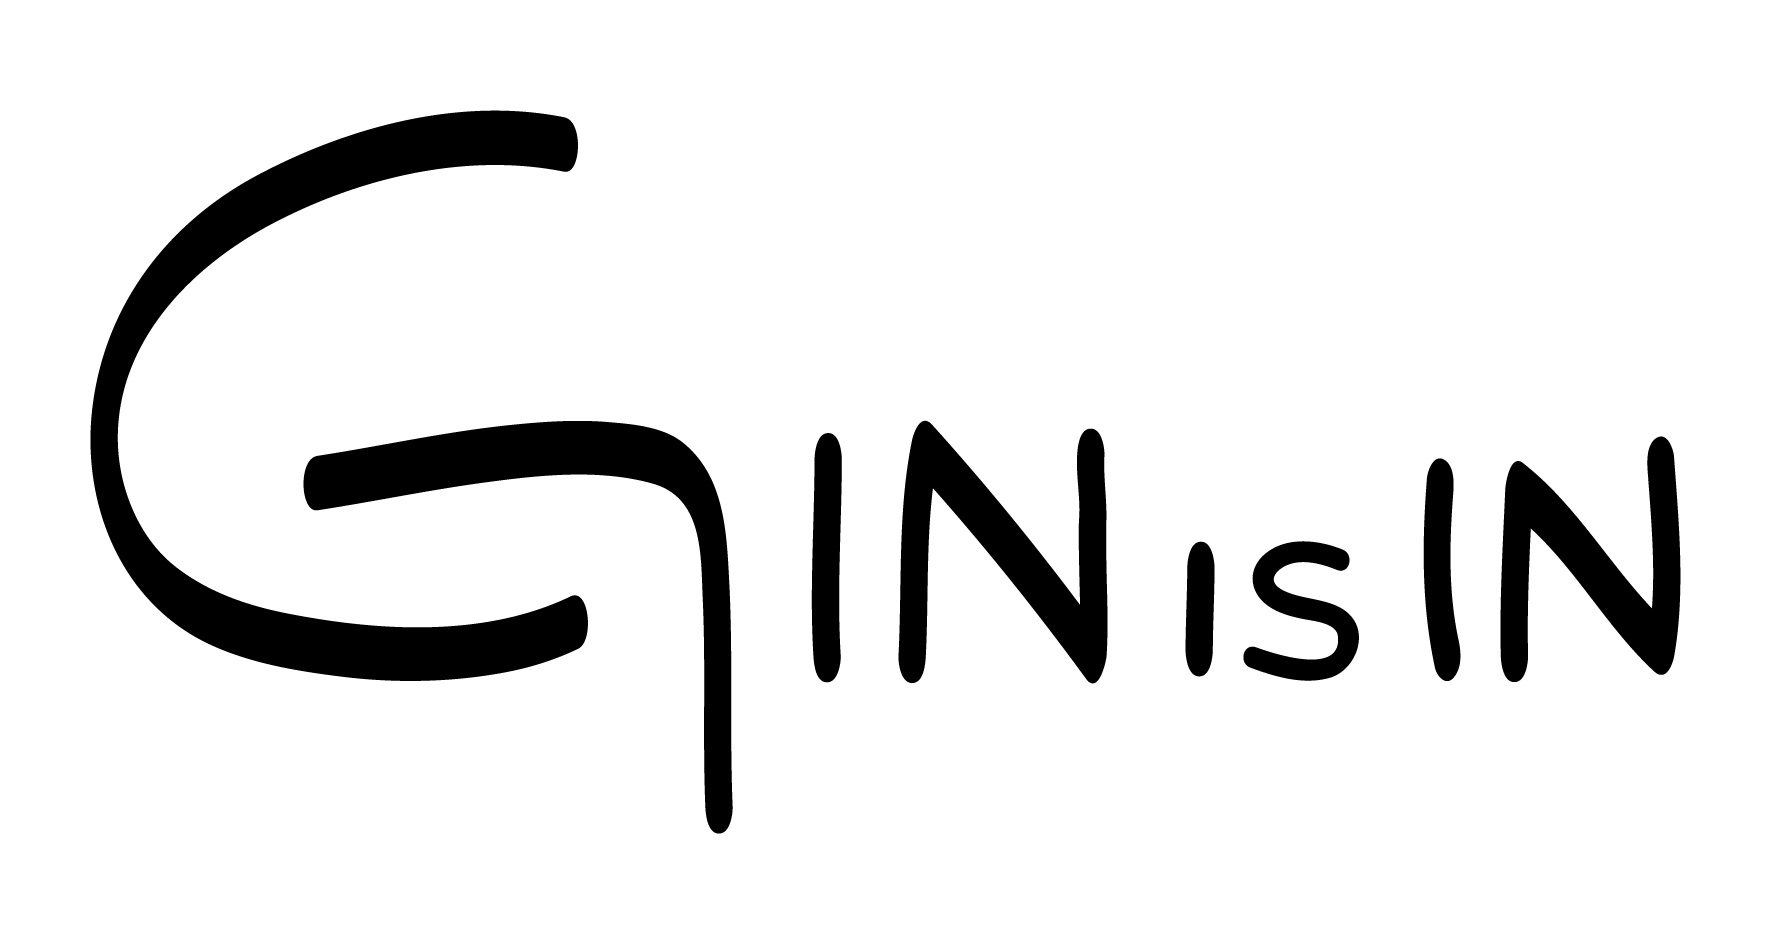 GINisIN